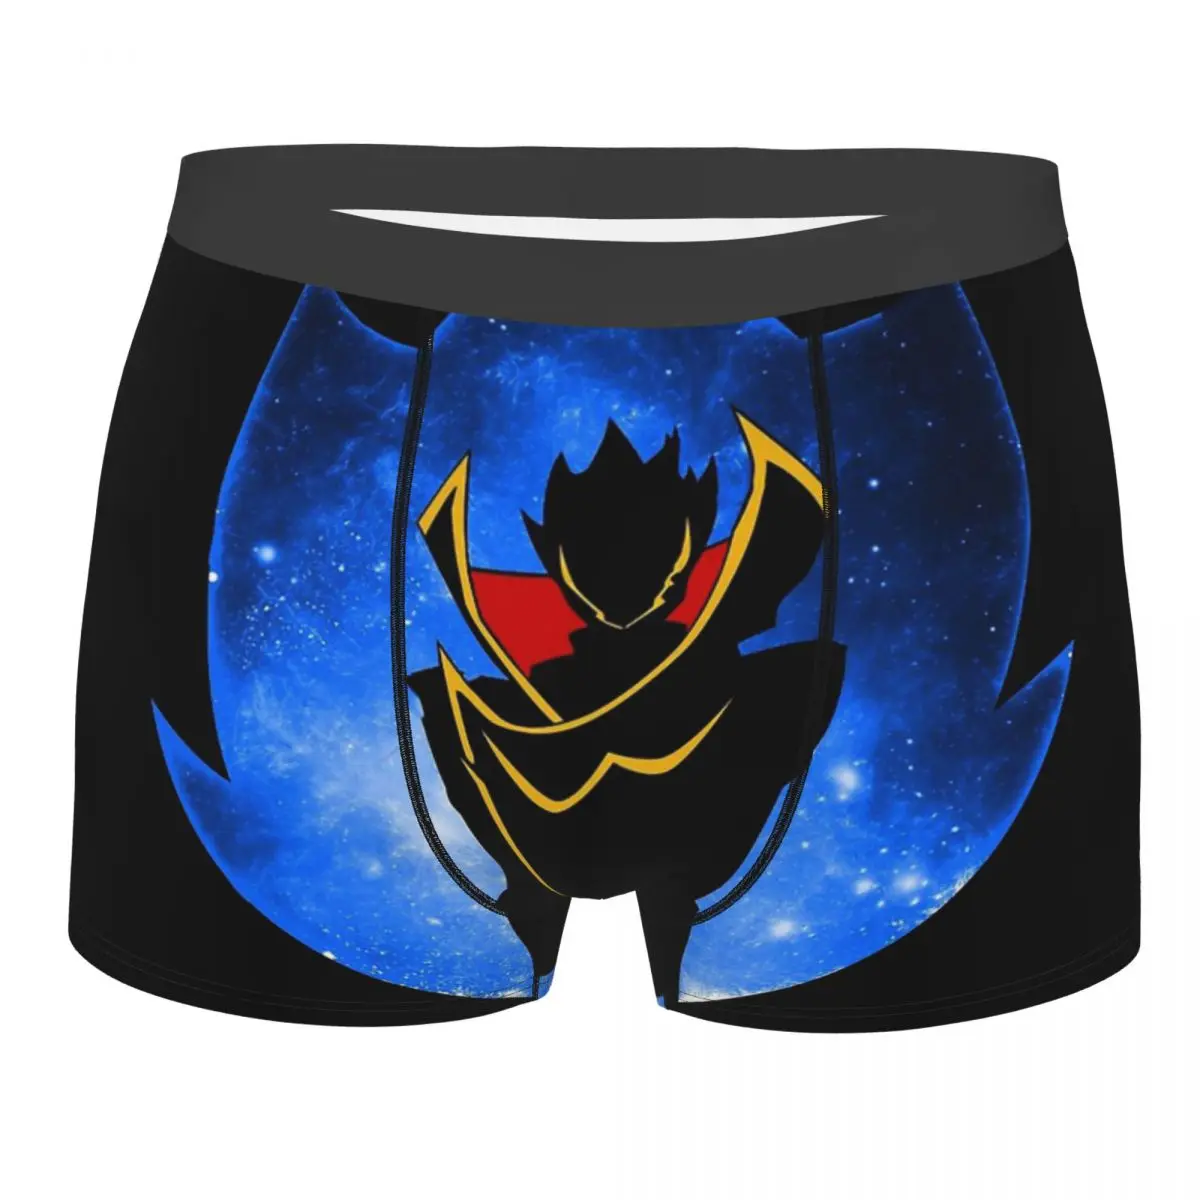 

Code Geass Japanese Mecha Anime Underpants Breathbale Panties Male Zero Underwear Comfortable Shorts Boxer Briefs